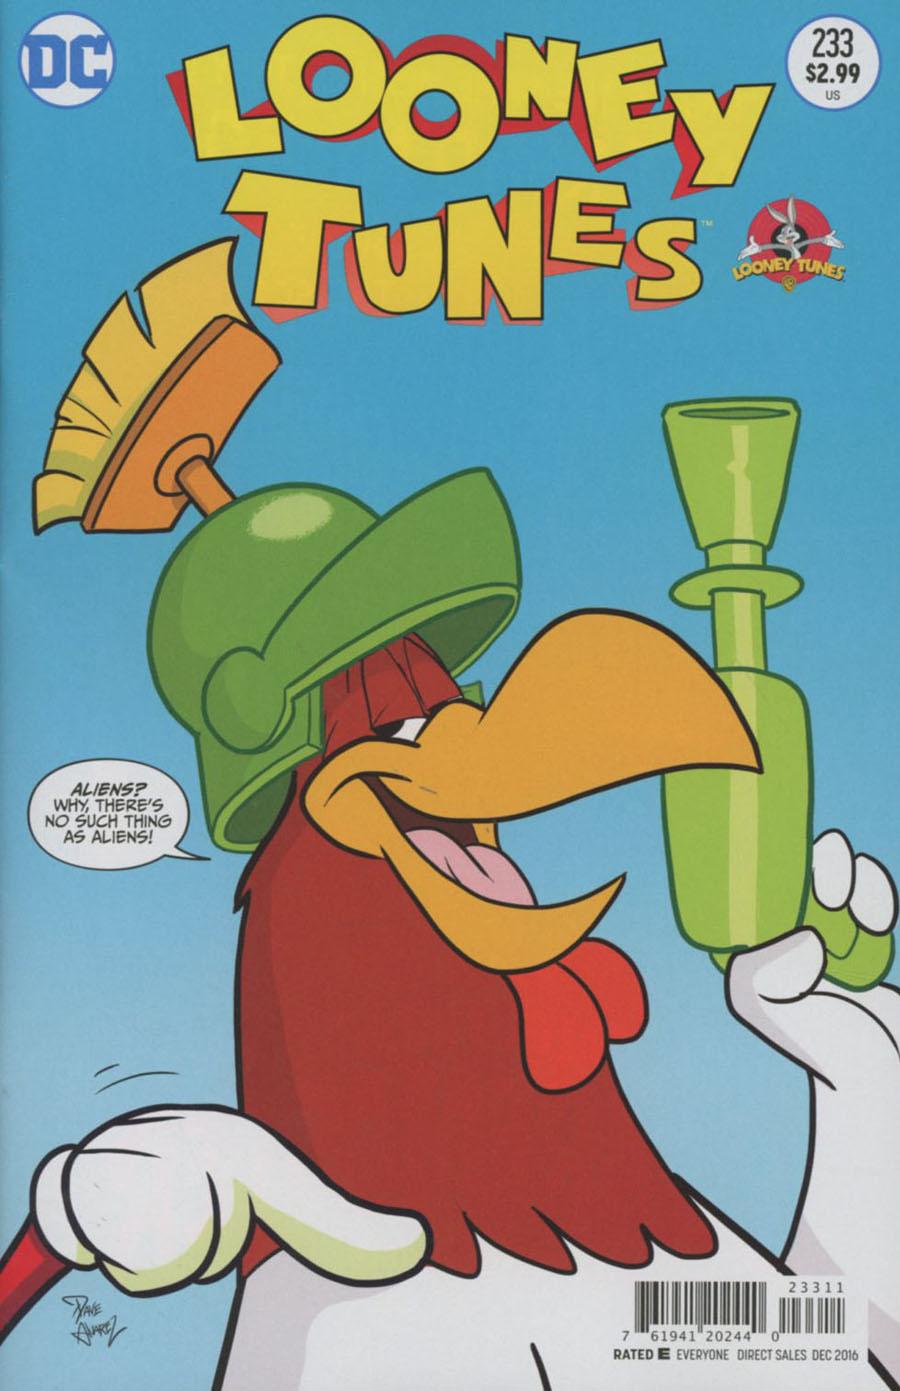 Looney Tunes Vol. 3 #233